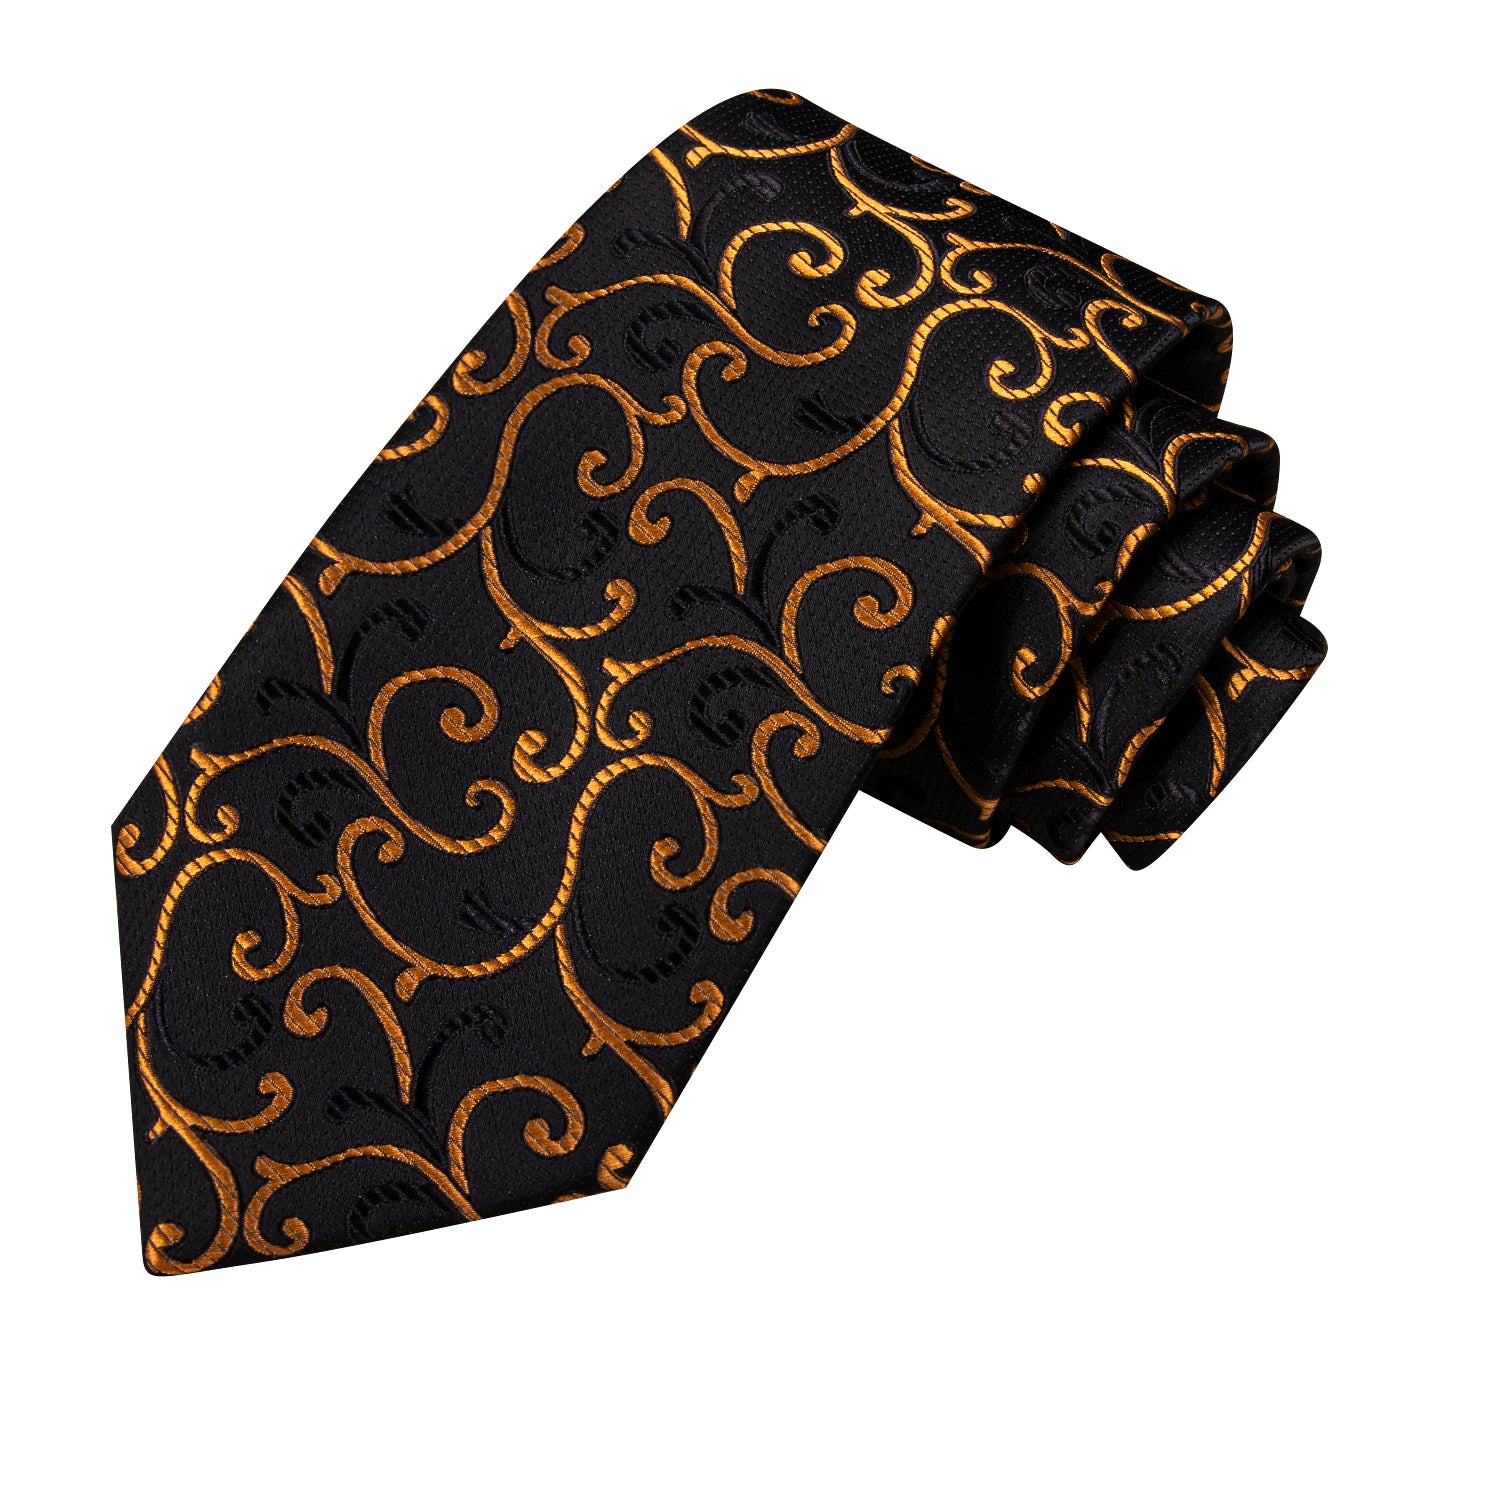 Hi-Tie Gold Floral Men's Tie Pocket Square Cufflinks Set